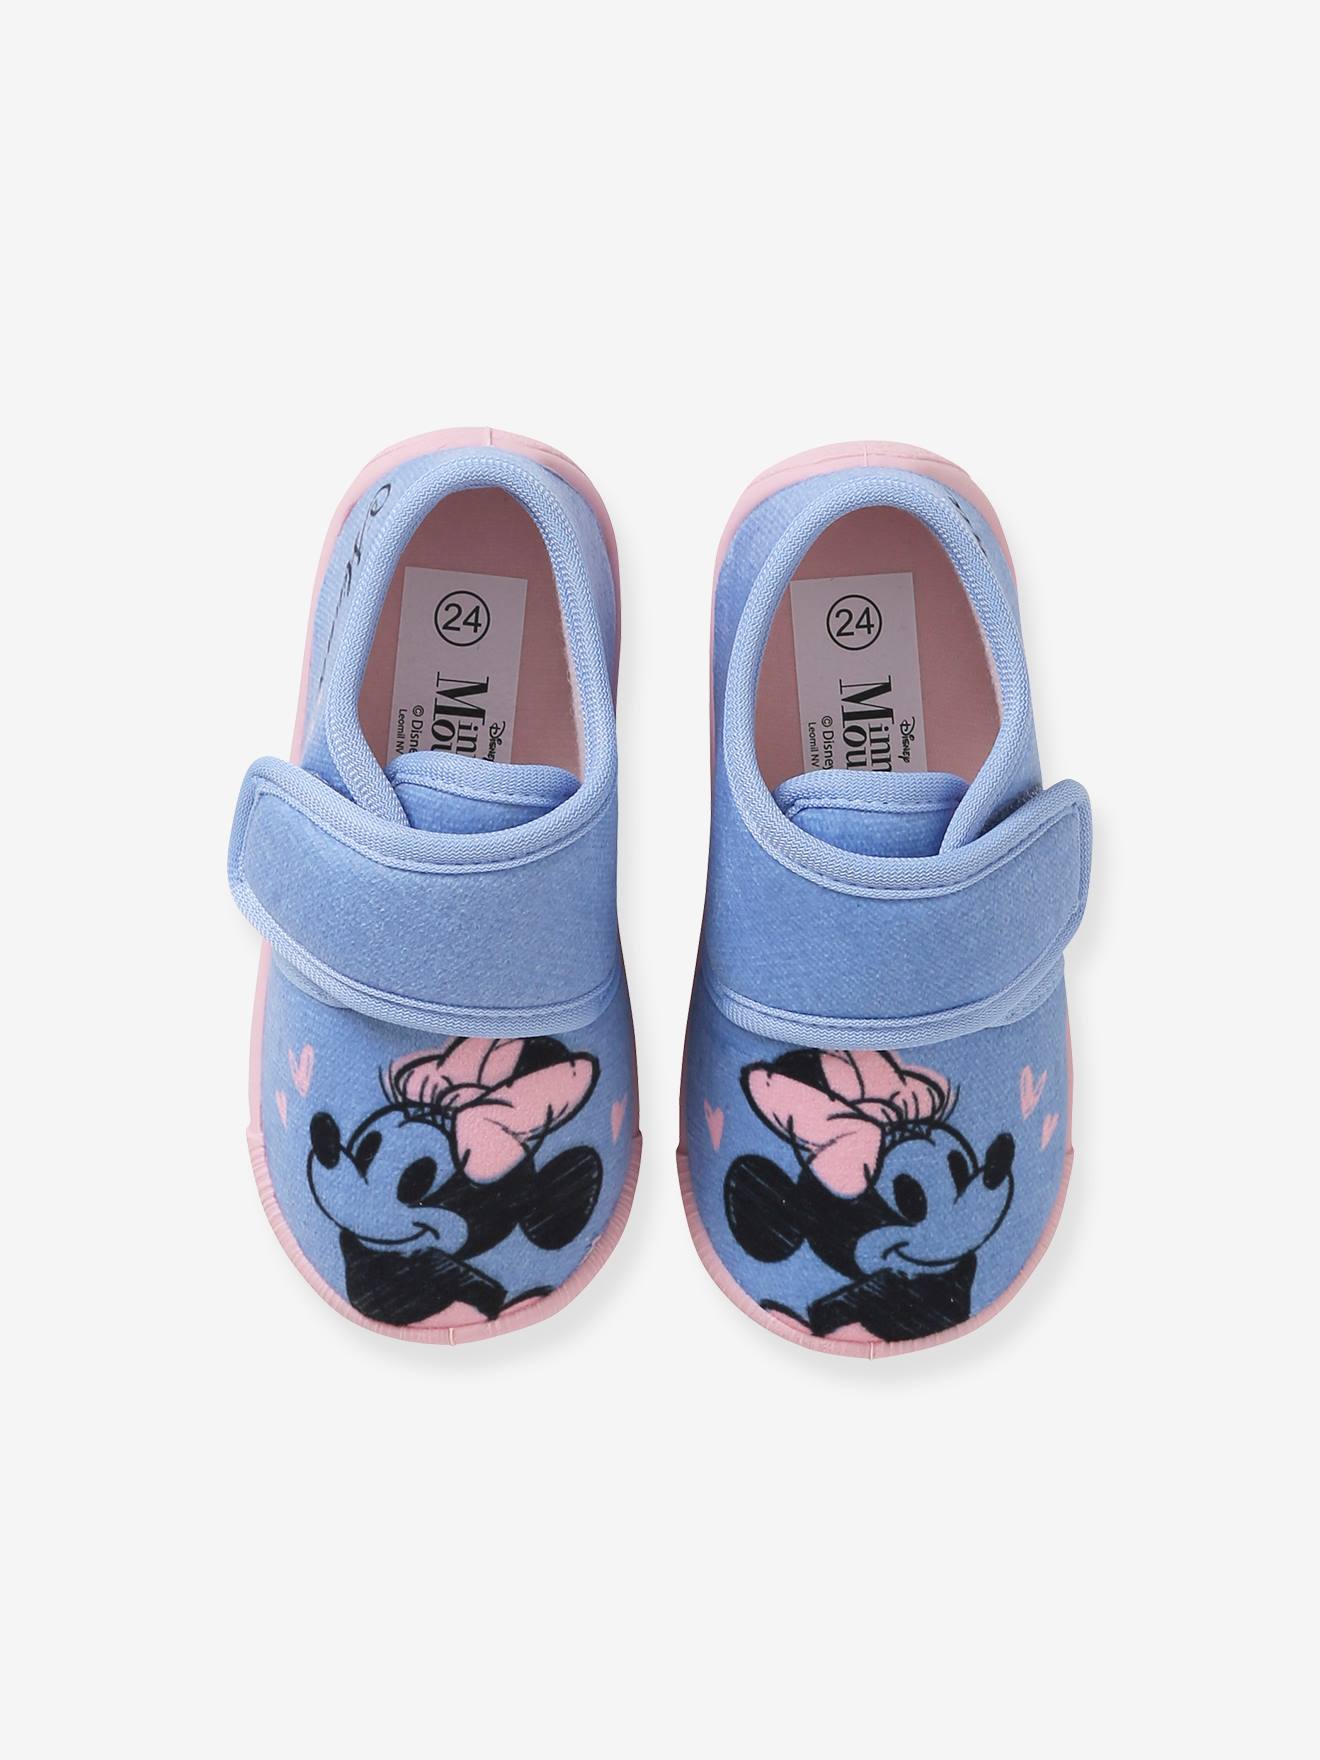 Disney® Minnie Mouse Shoes, for Children - blue medium solid with design,  Shoes | Vertbaudet